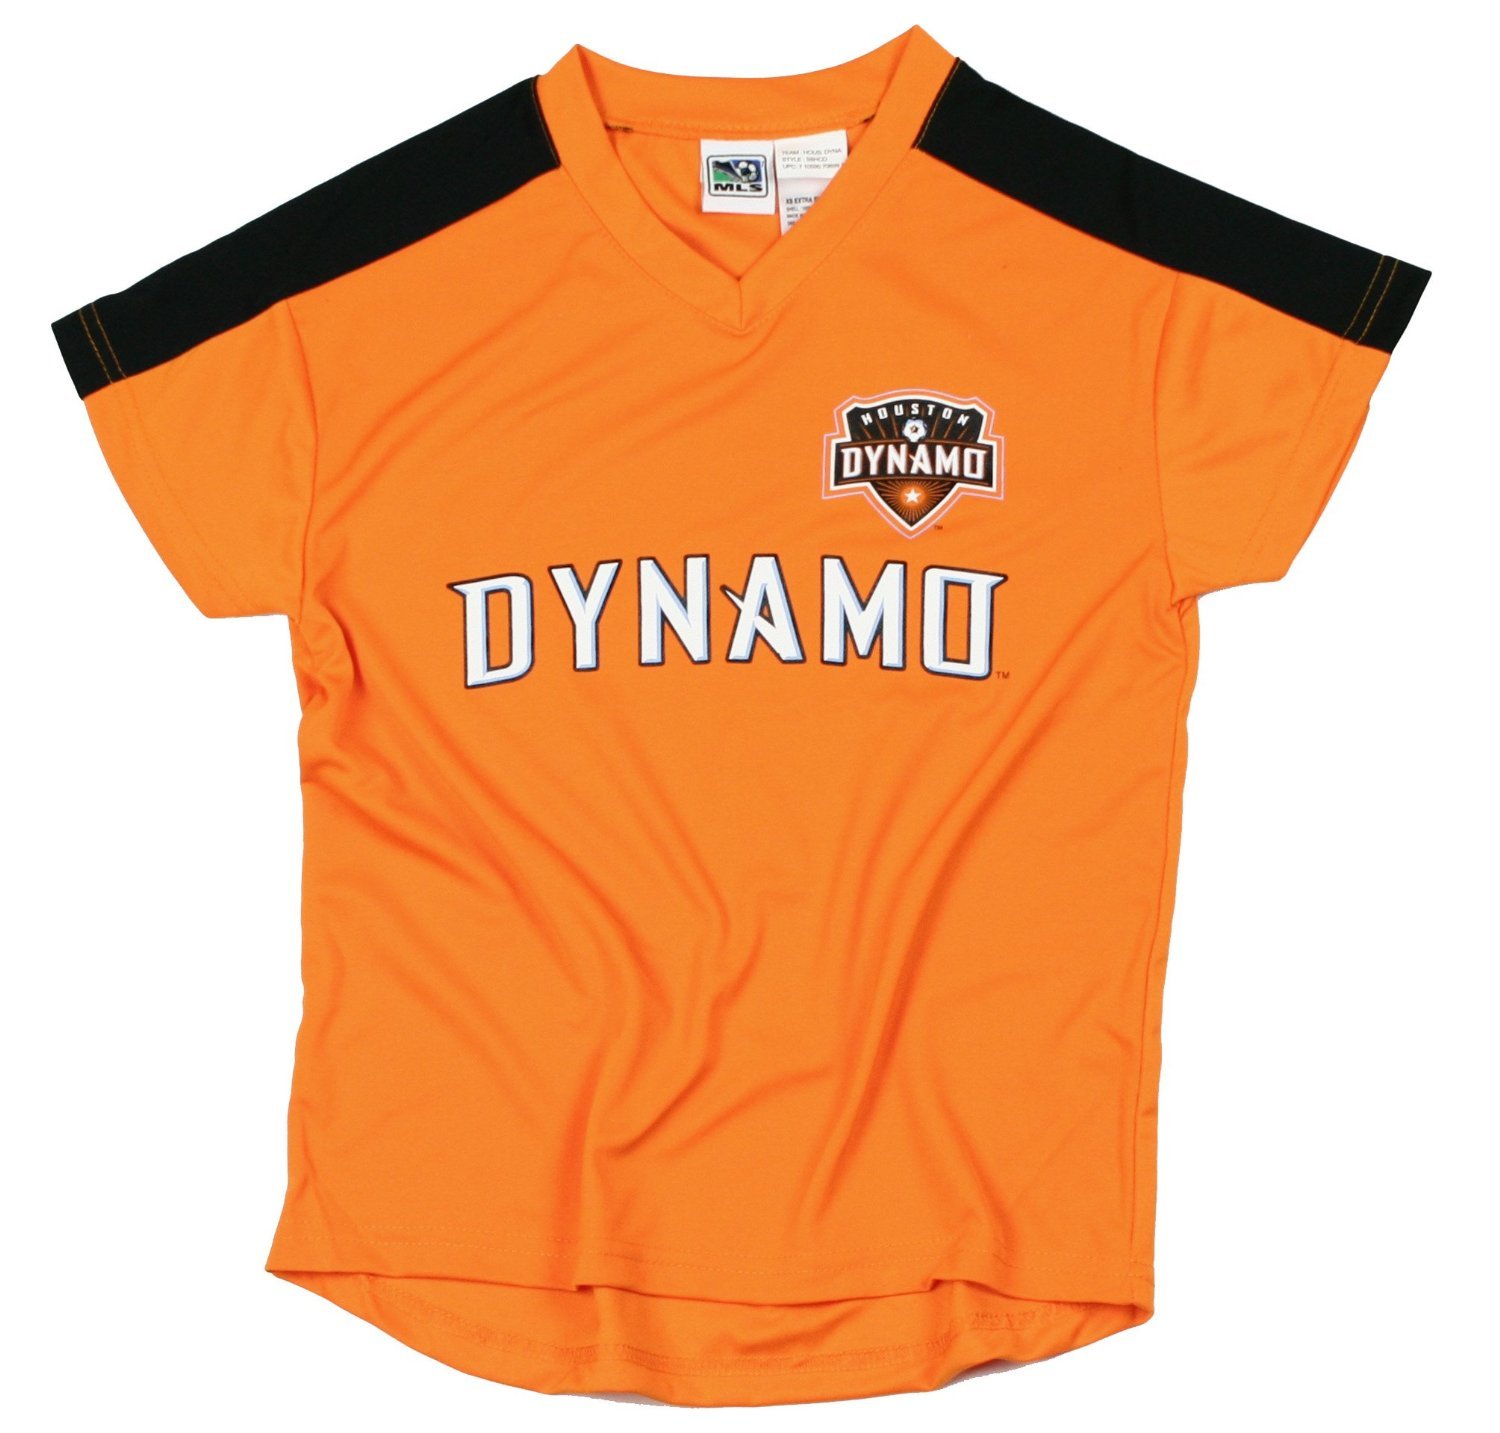 Houston Dynamo MLS Soccer Football Boys Youth Team Jersey Shirt Top, Orange - image 1 of 1